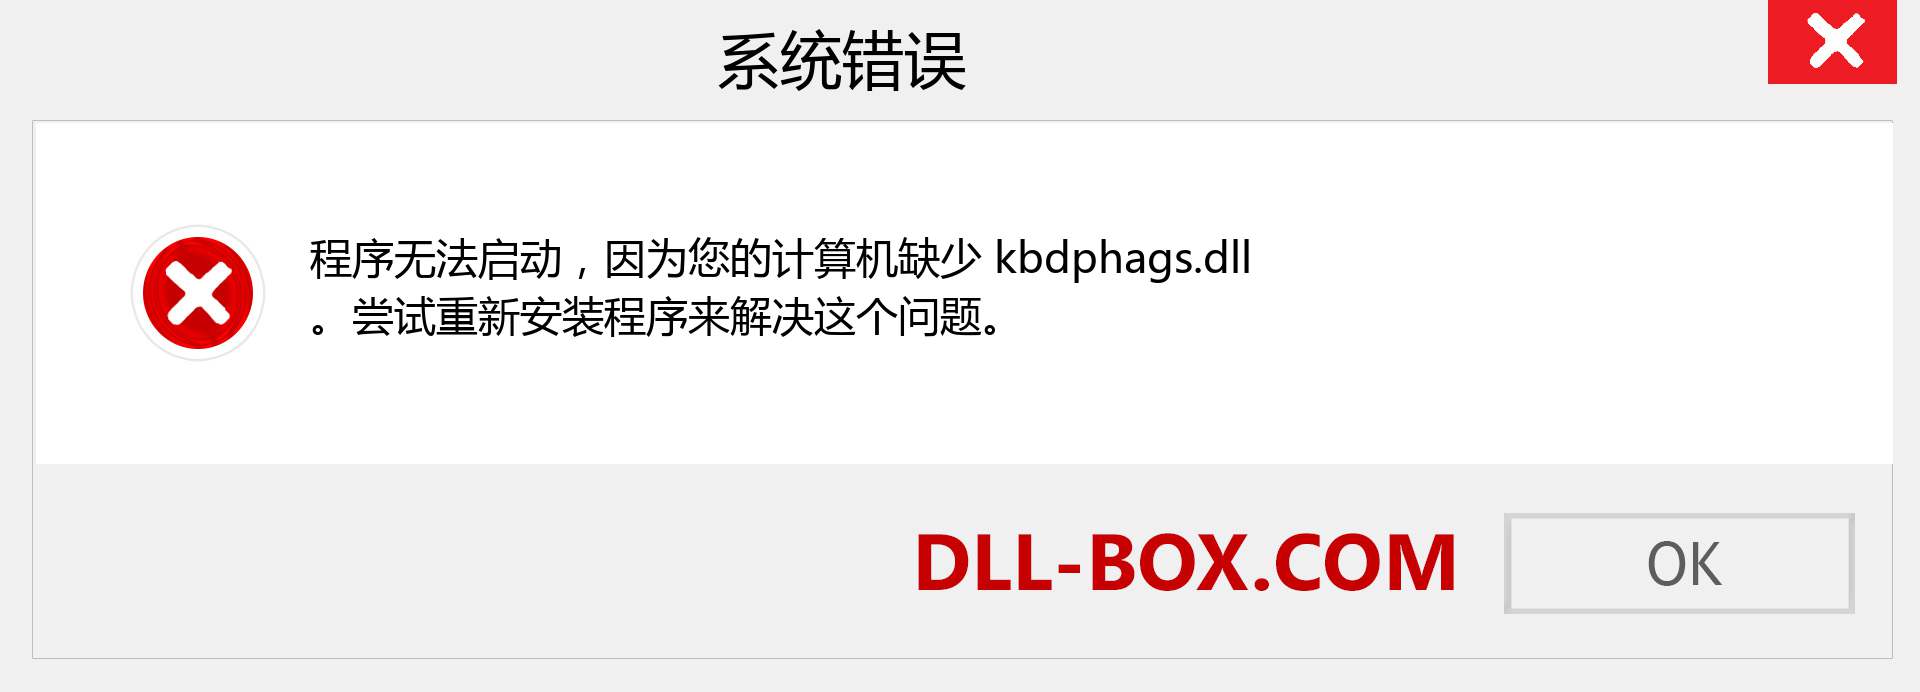 kbdphags.dll 文件丢失？。 适用于 Windows 7、8、10 的下载 - 修复 Windows、照片、图像上的 kbdphags dll 丢失错误